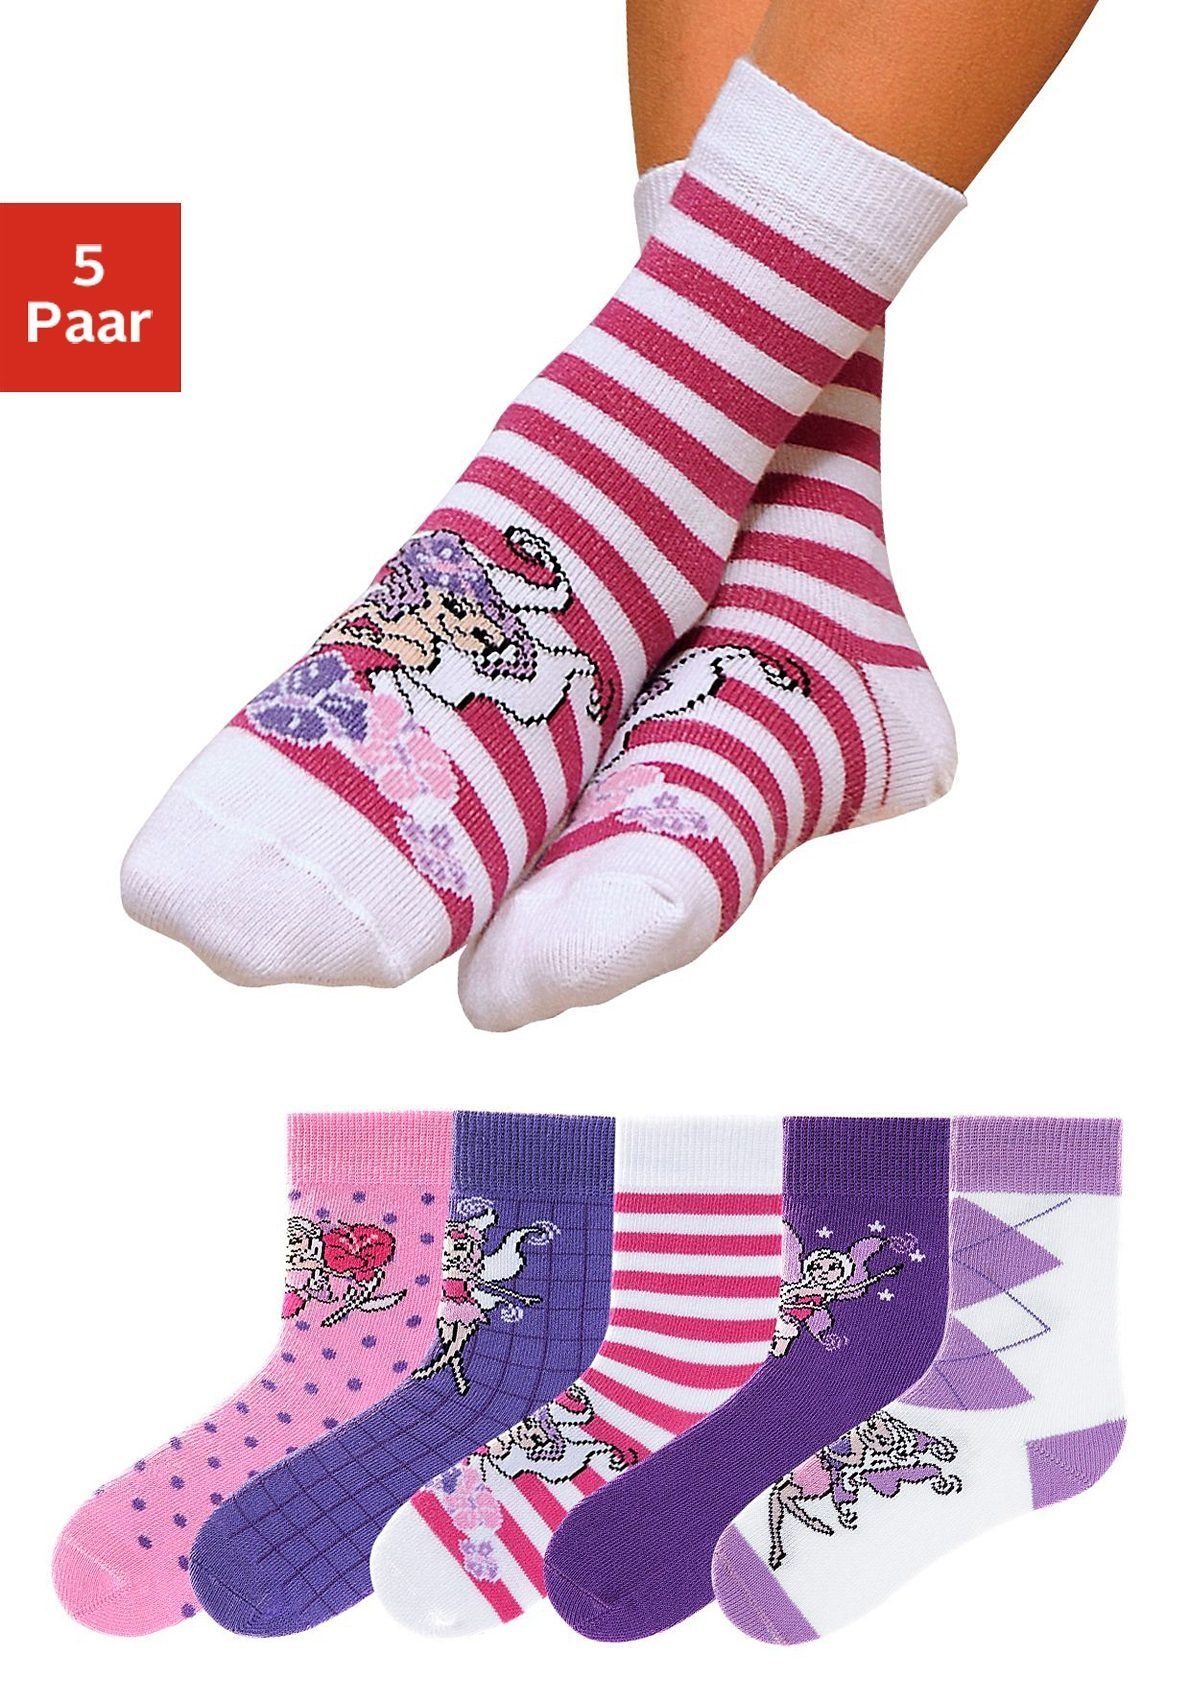 H.I.S Socken (5-Paar) in 5 farbenfrohen Designs | Lange Socken